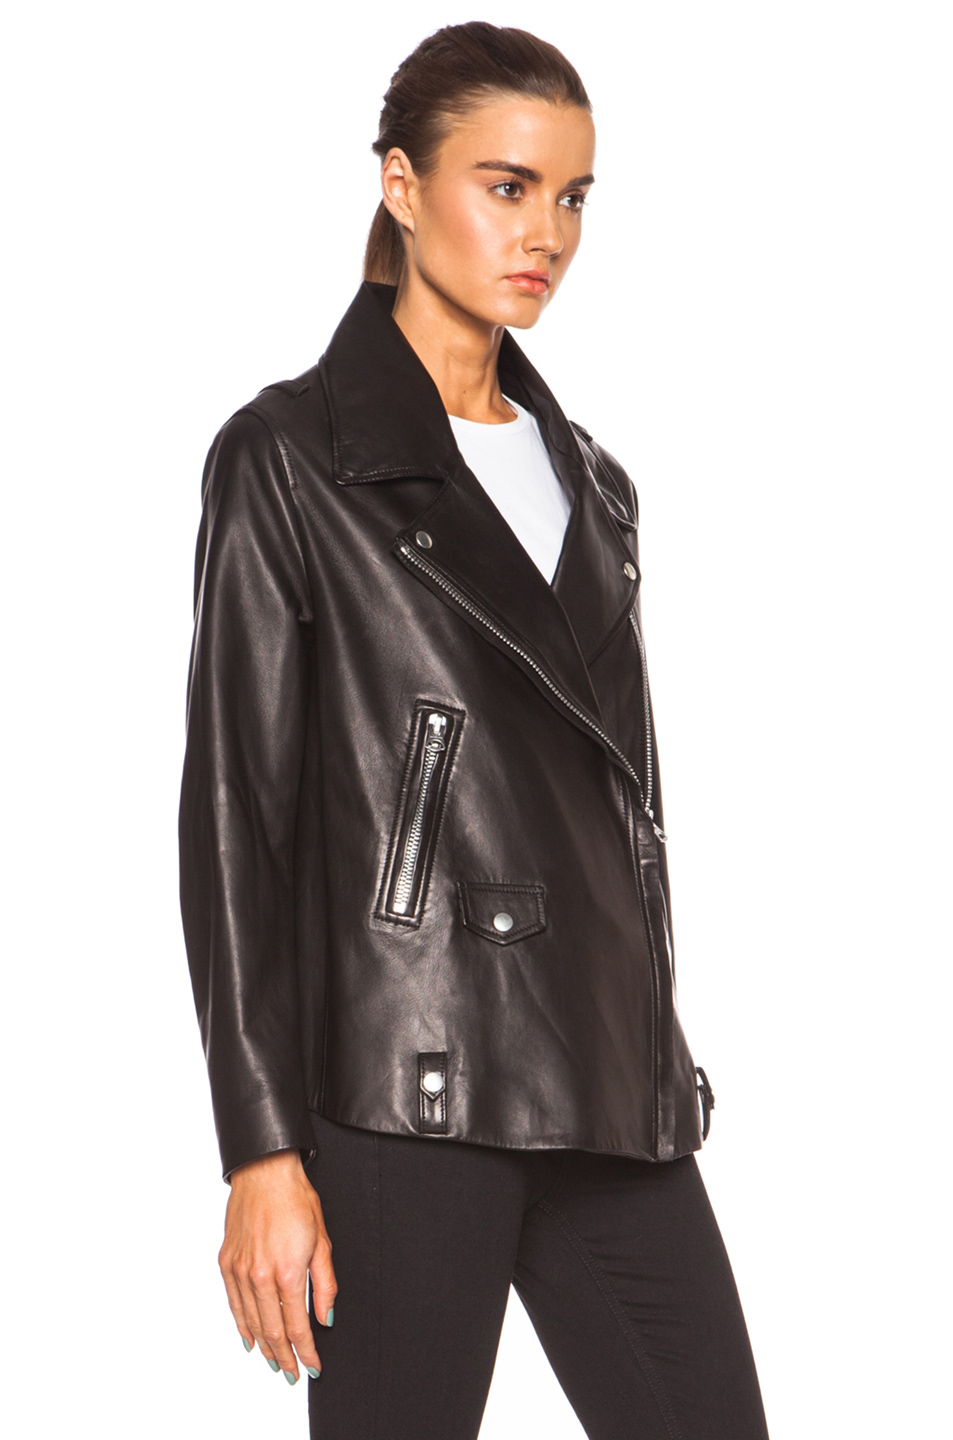 Acne Studios Swift Light Leather Jacket in Black - Lyst